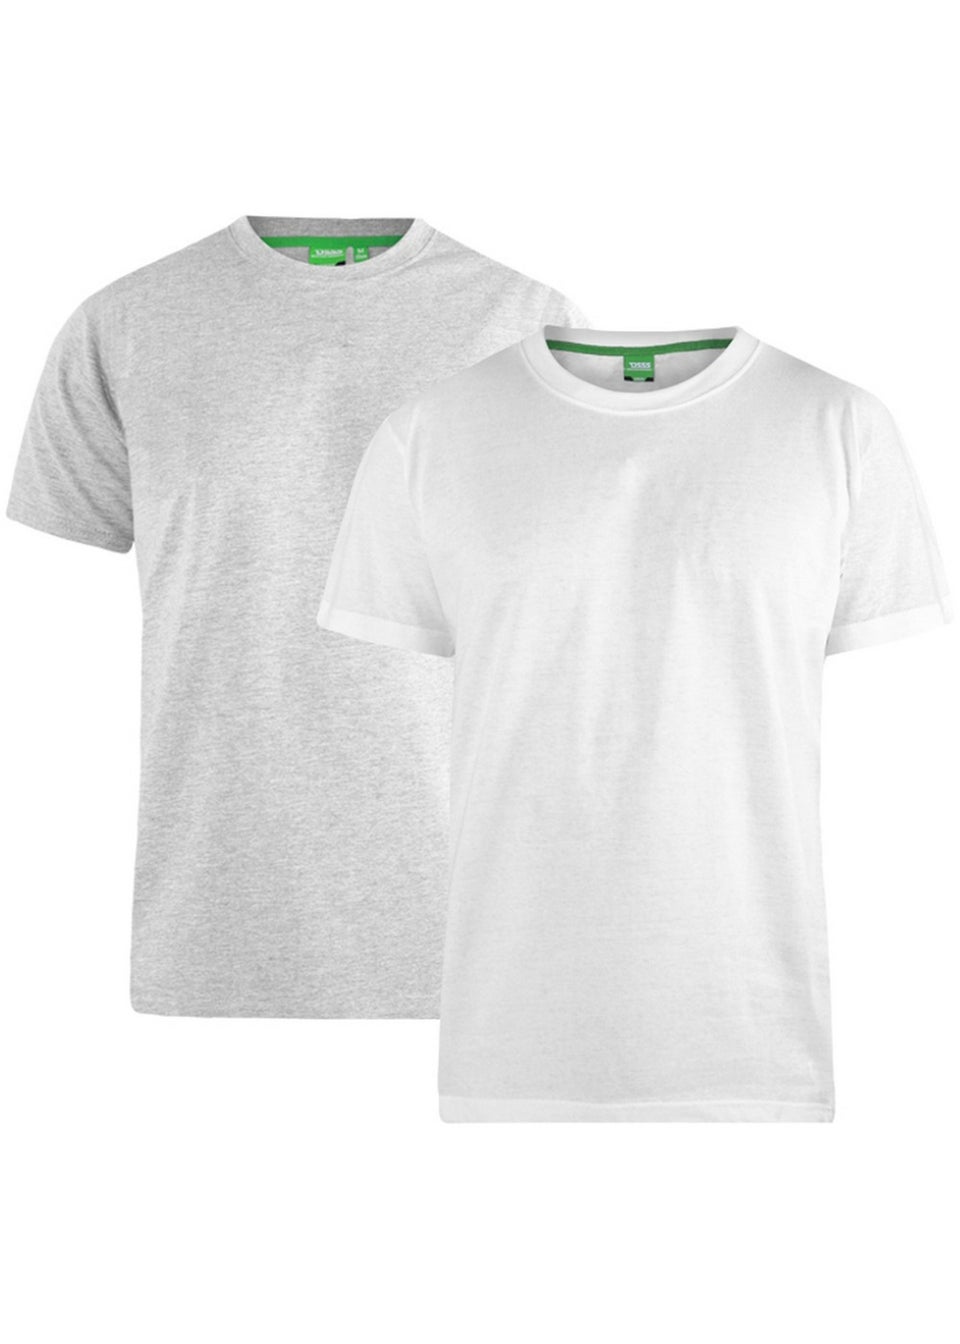 Duke Grey/White Fenton Round Neck T-shirts (Pack of 2)